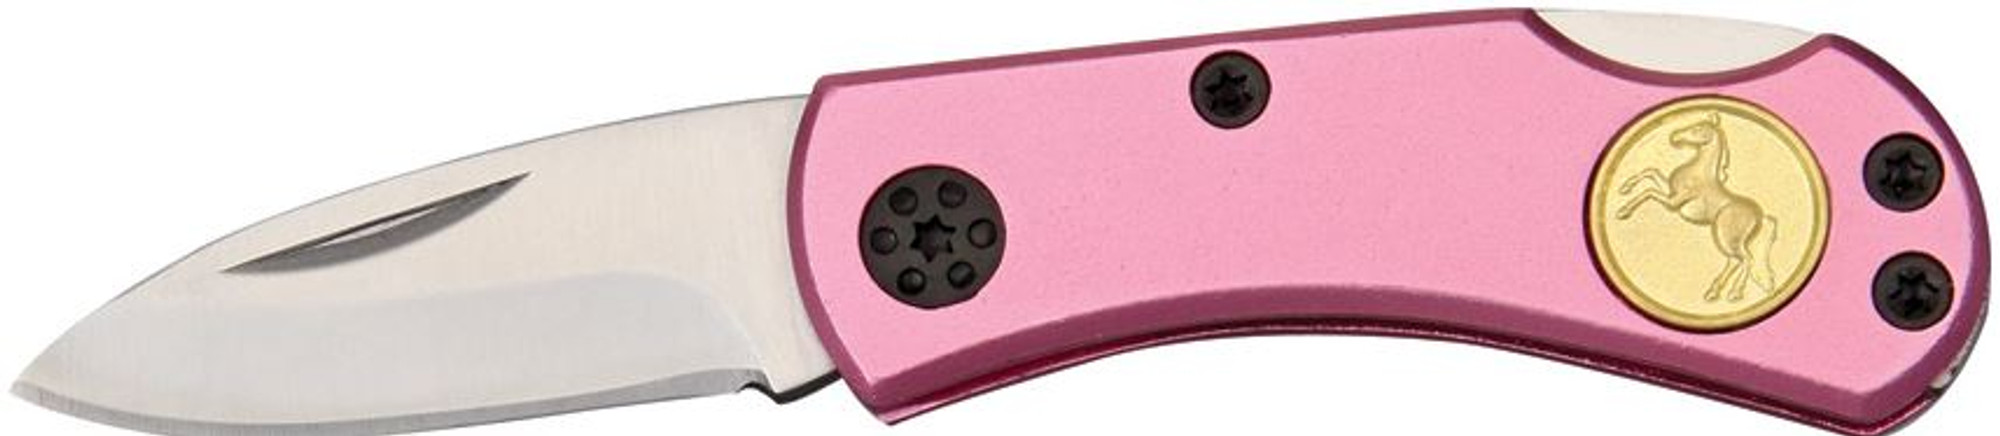 Colt 352 Mini Folder - Pink